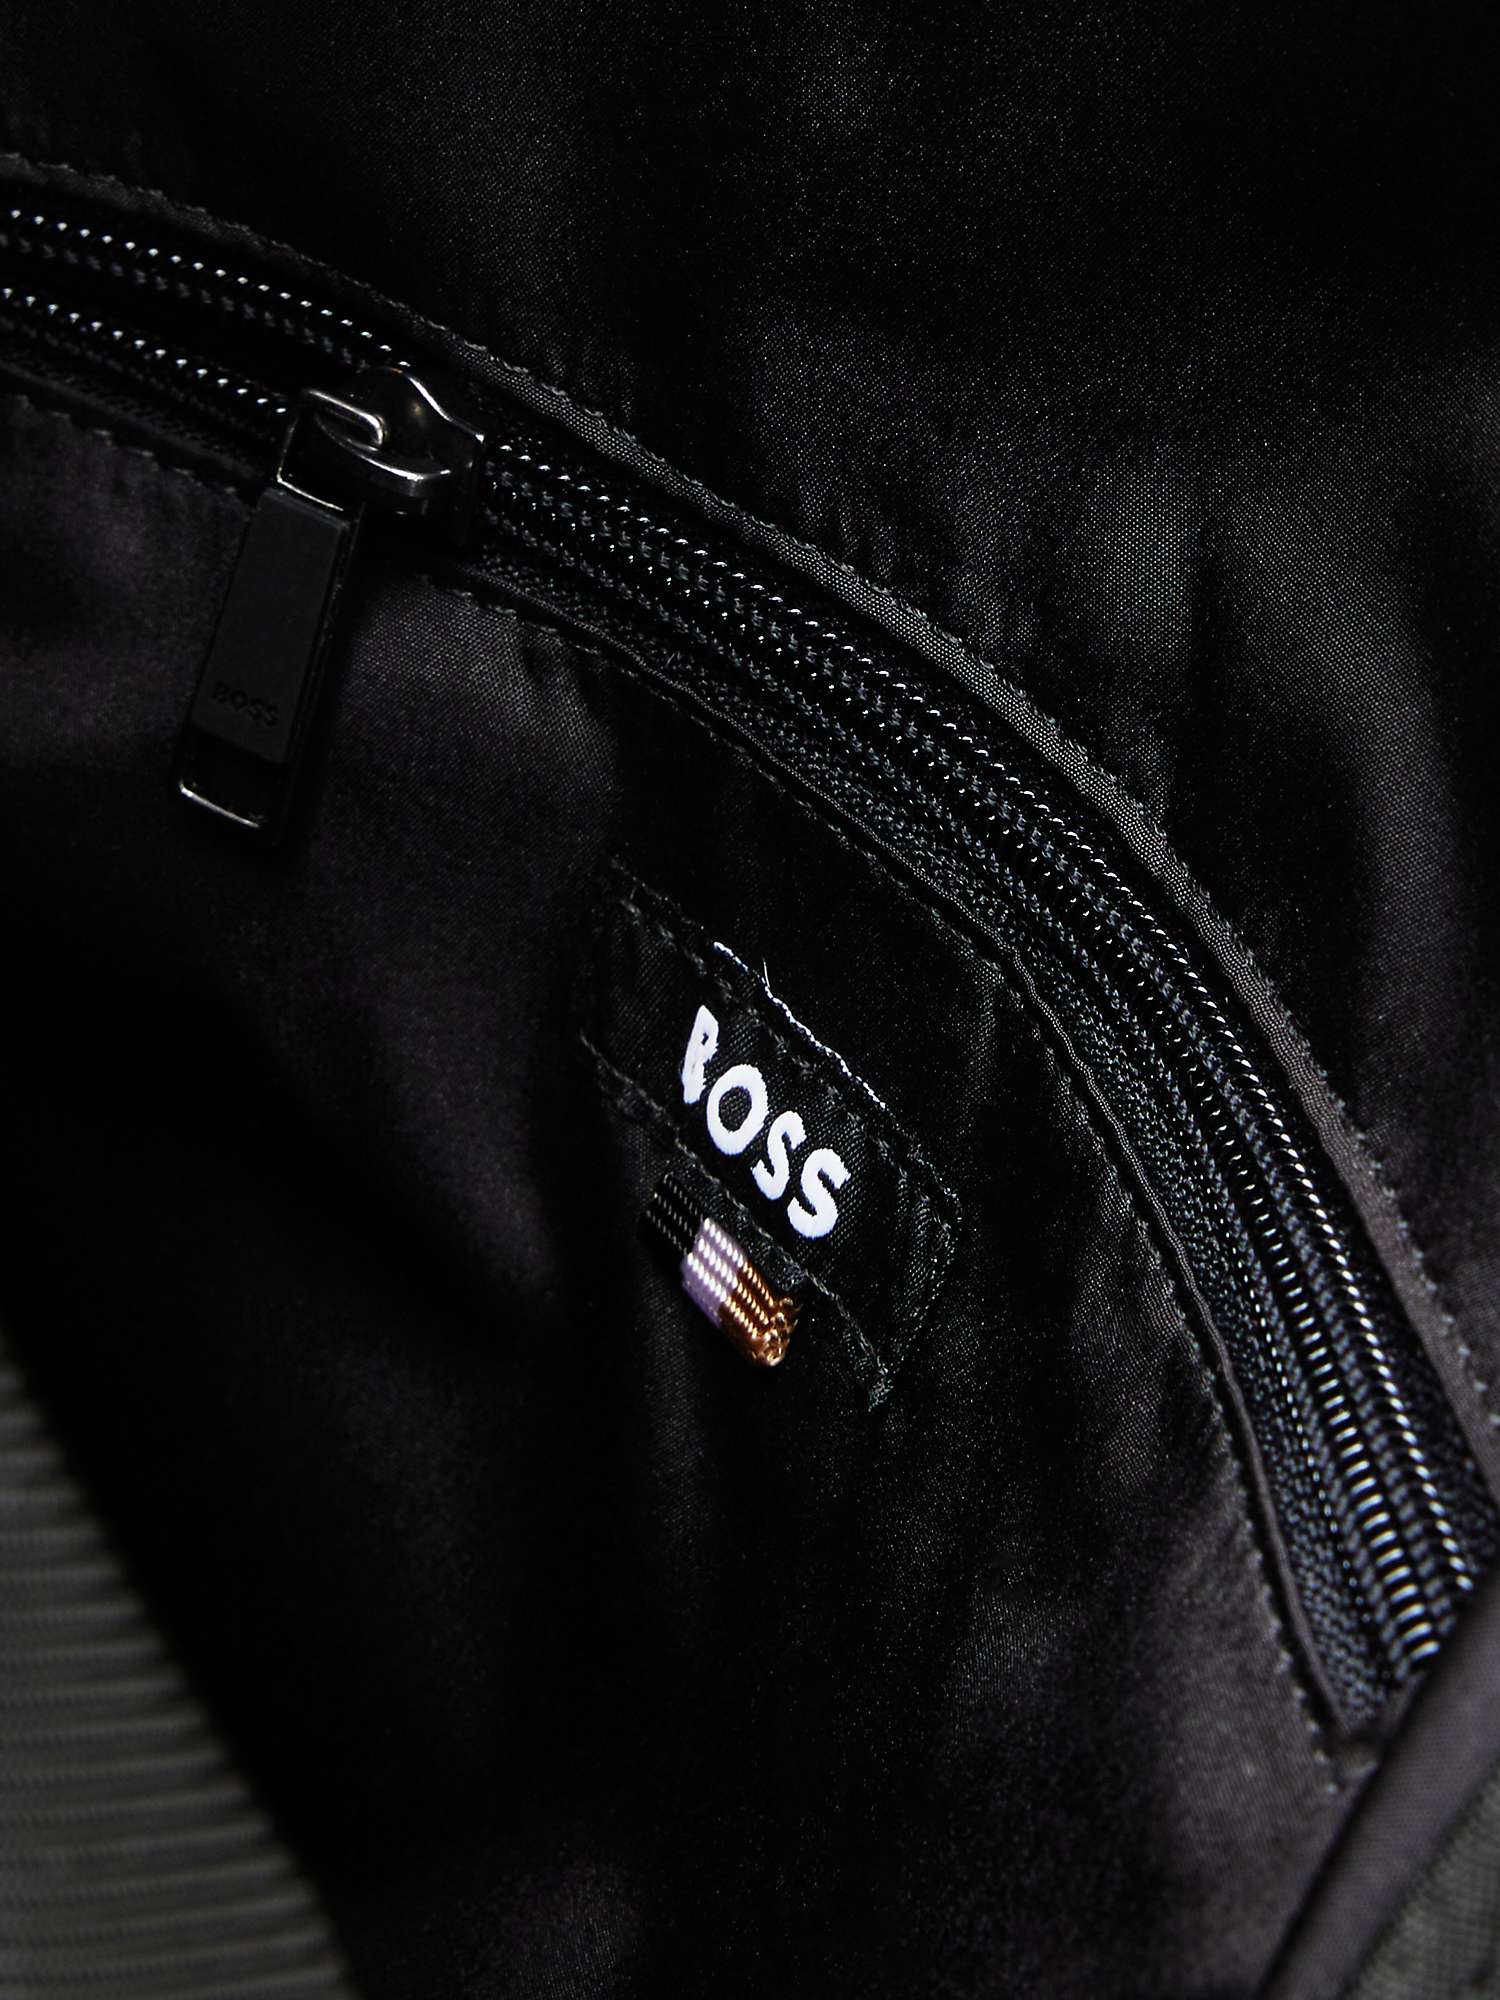 Buy BOSS Catch 2.0 Backpack, Black Online at johnlewis.com